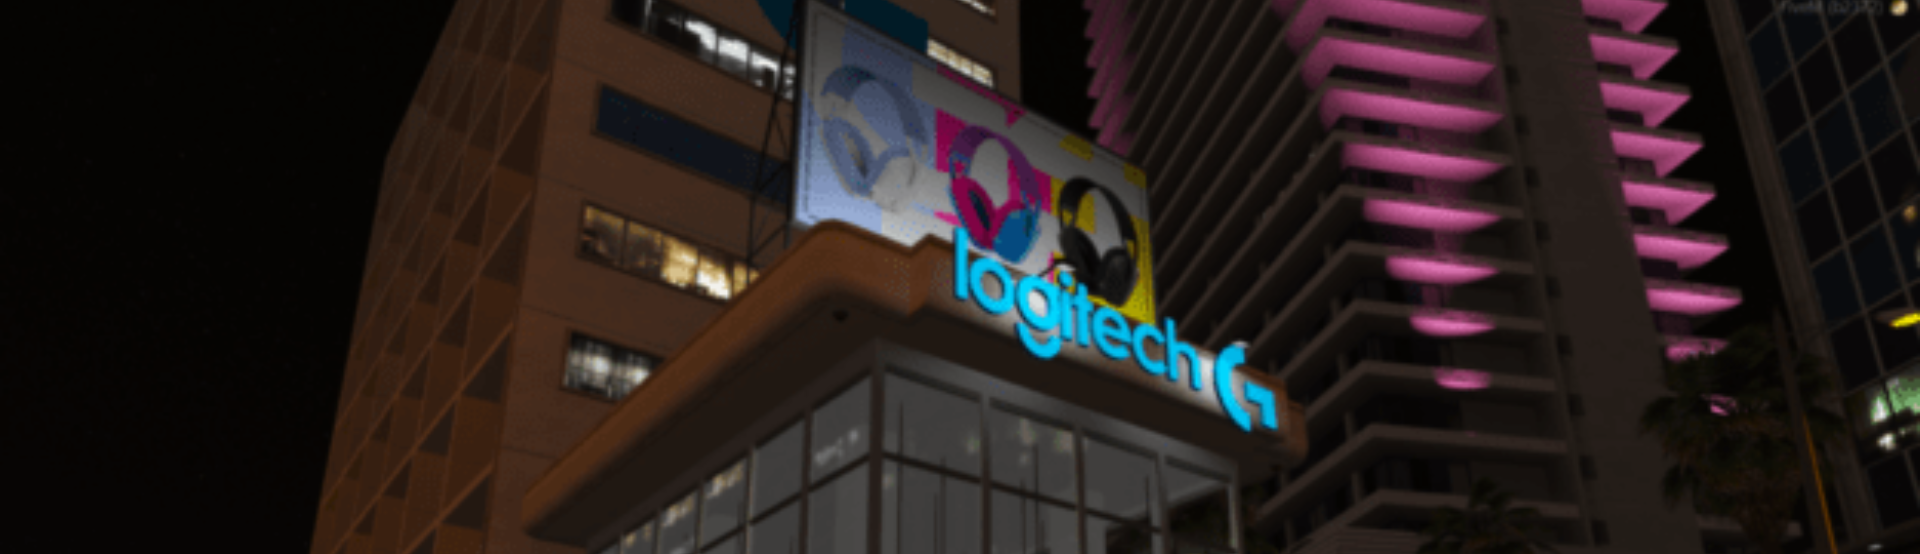 Logitech lança headsets no Complexo, servidor de GTA RP